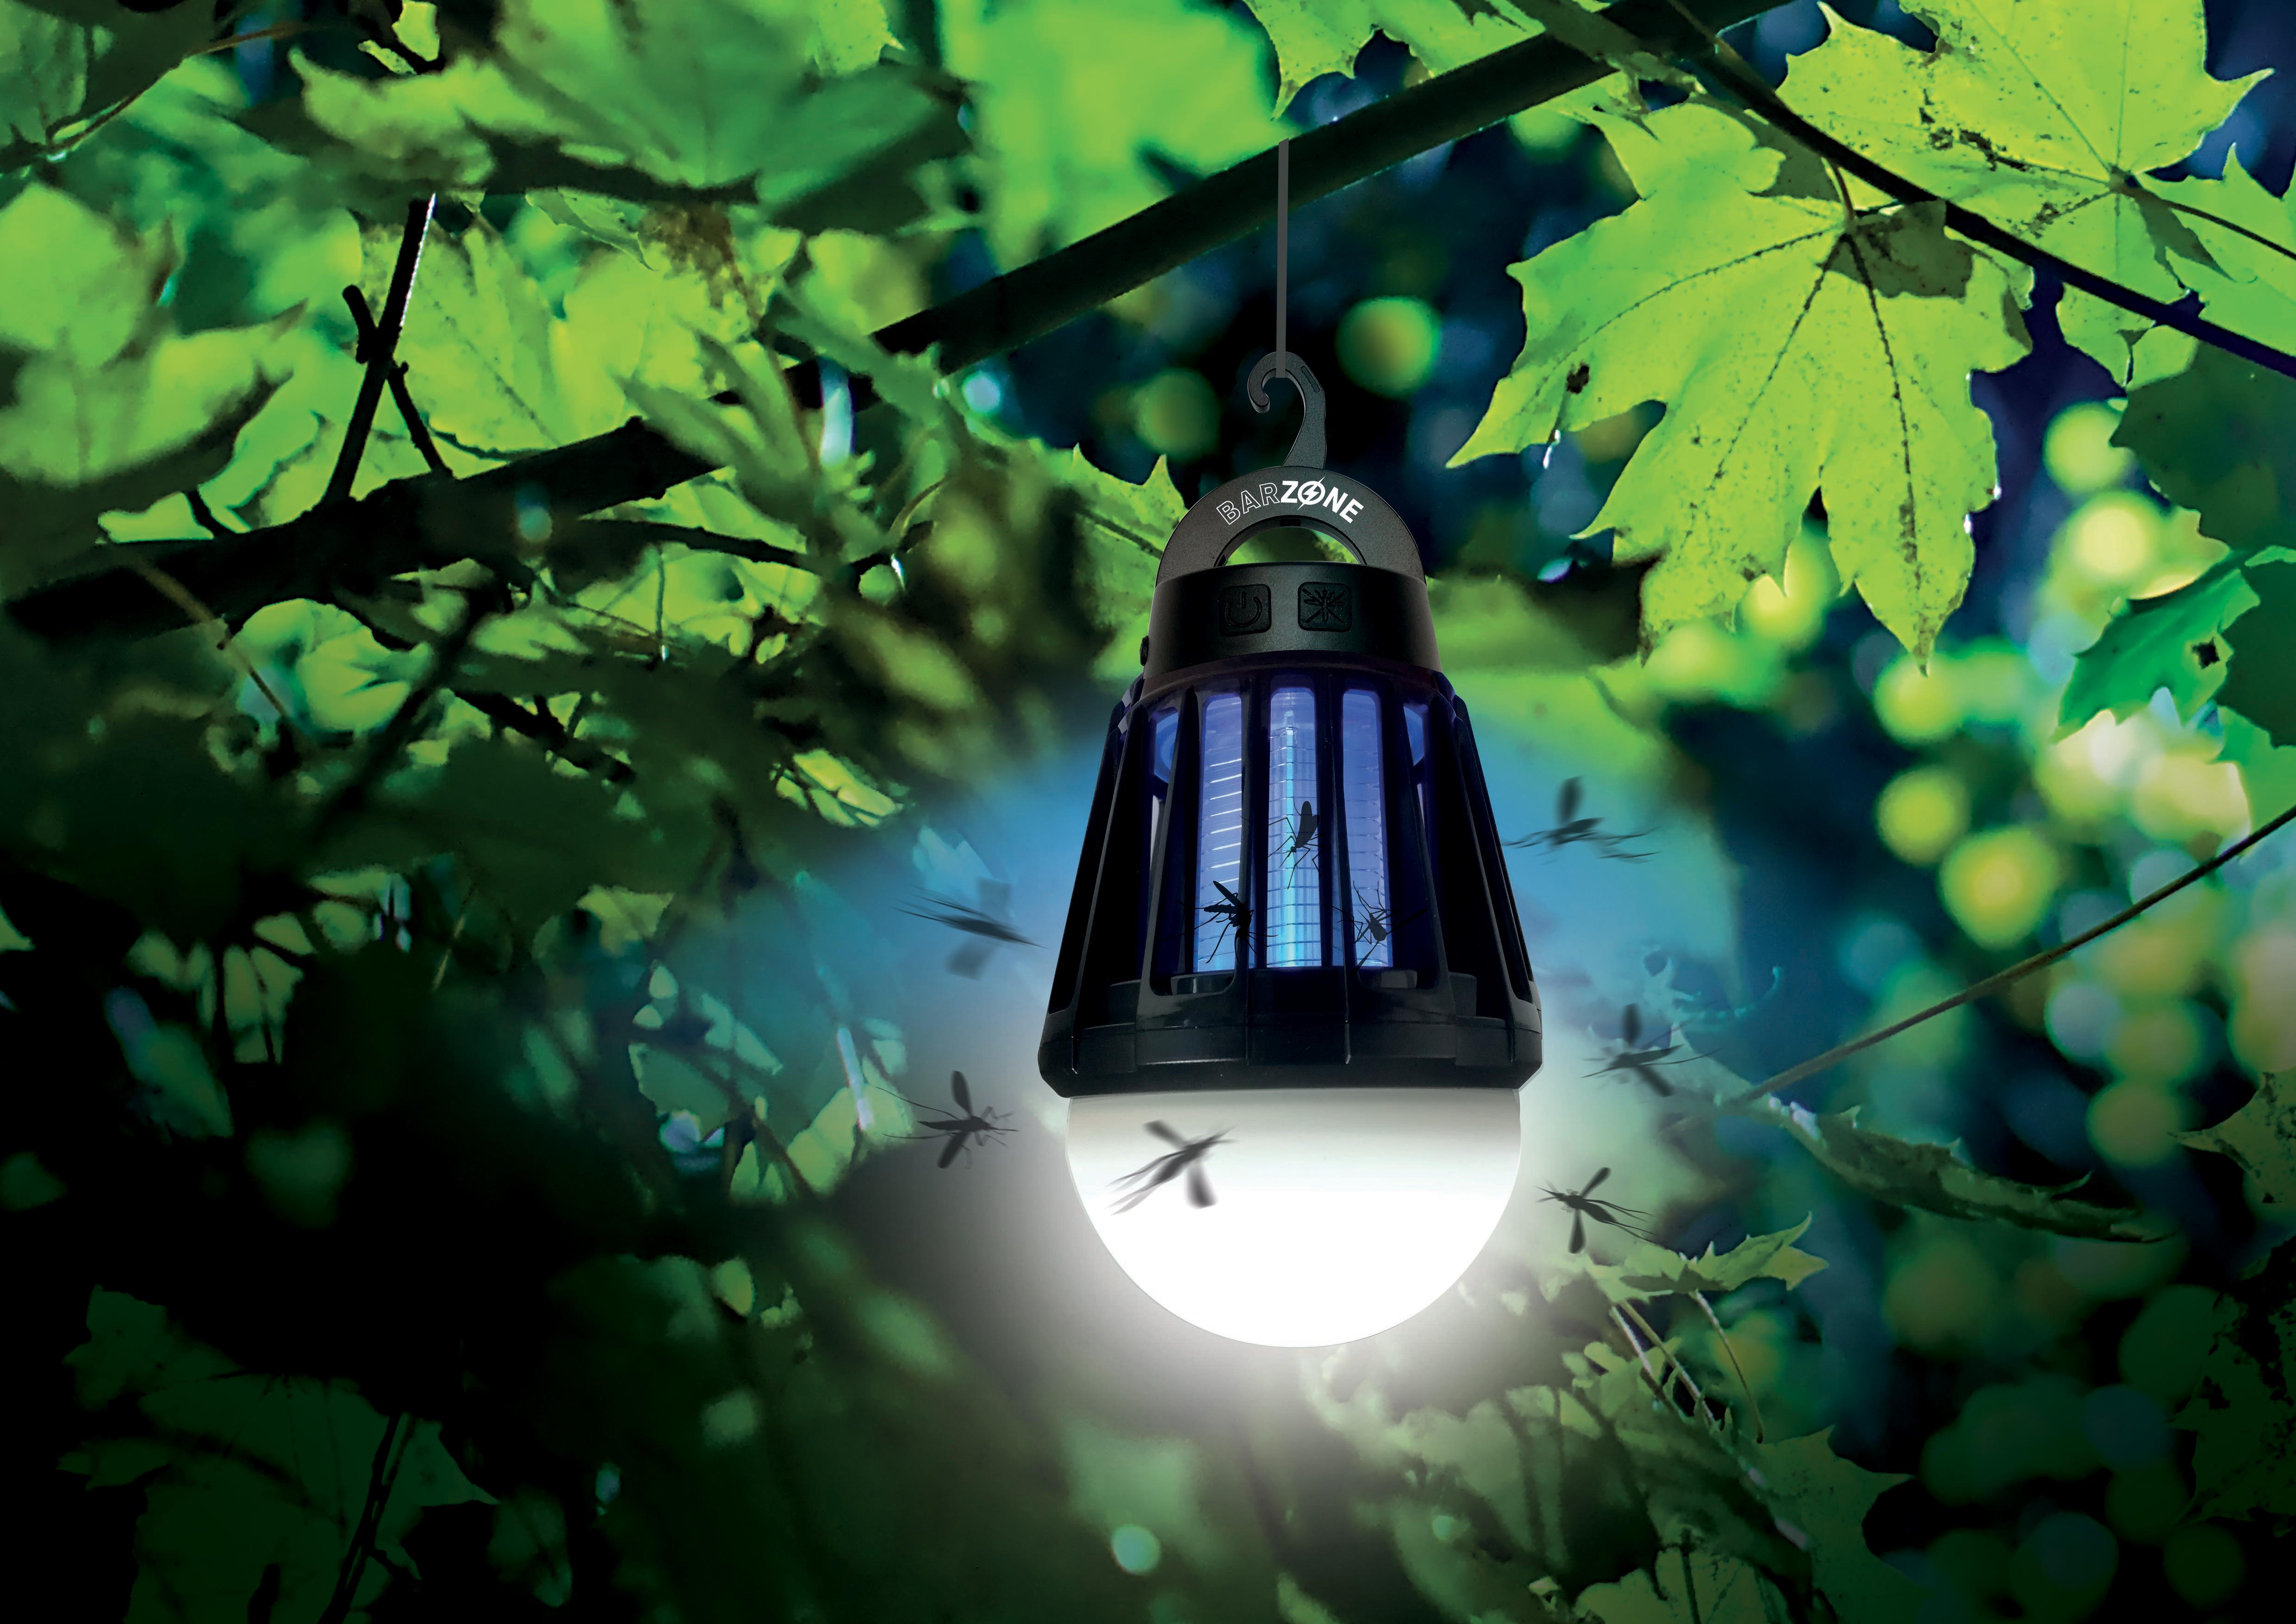 BARRIERE A INSECTES Barzone Lampe LED Nomade Anti-Moustiques 2 en